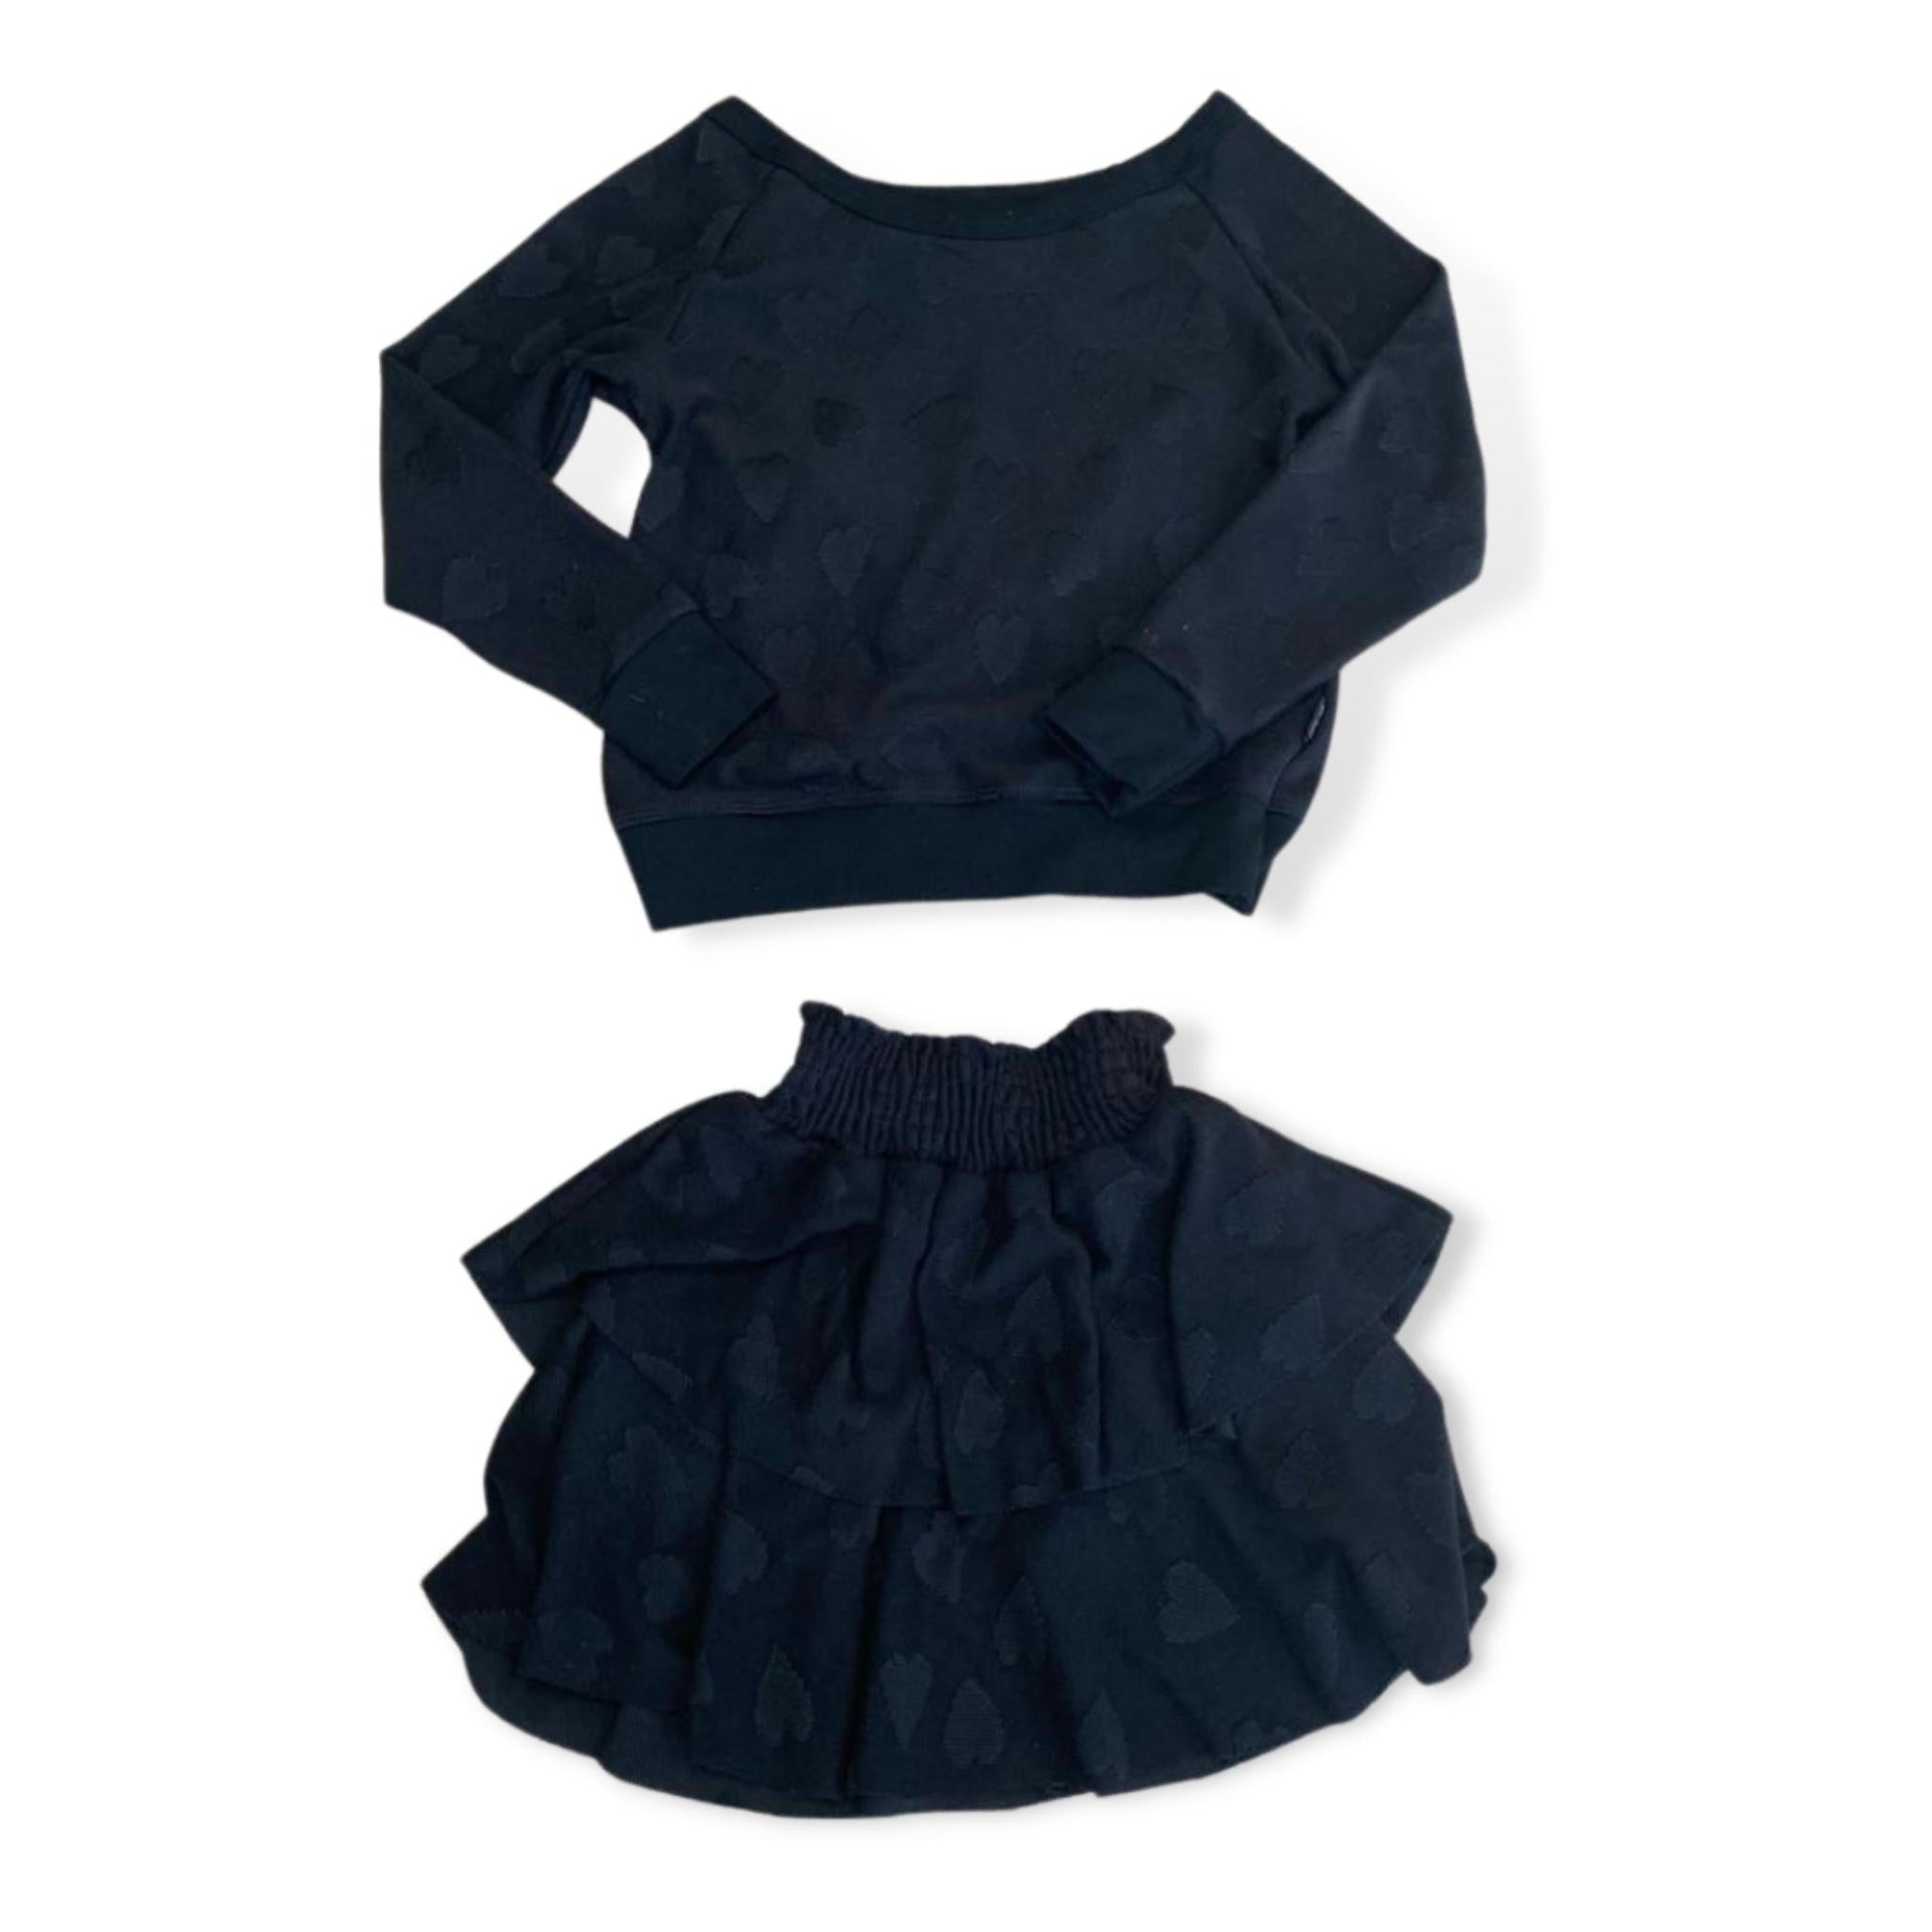 T2Love Black Smocking Tier Skirt Knit Hearts - a Spirit Animal - Skirt $30-$60 4 active Aug 2022